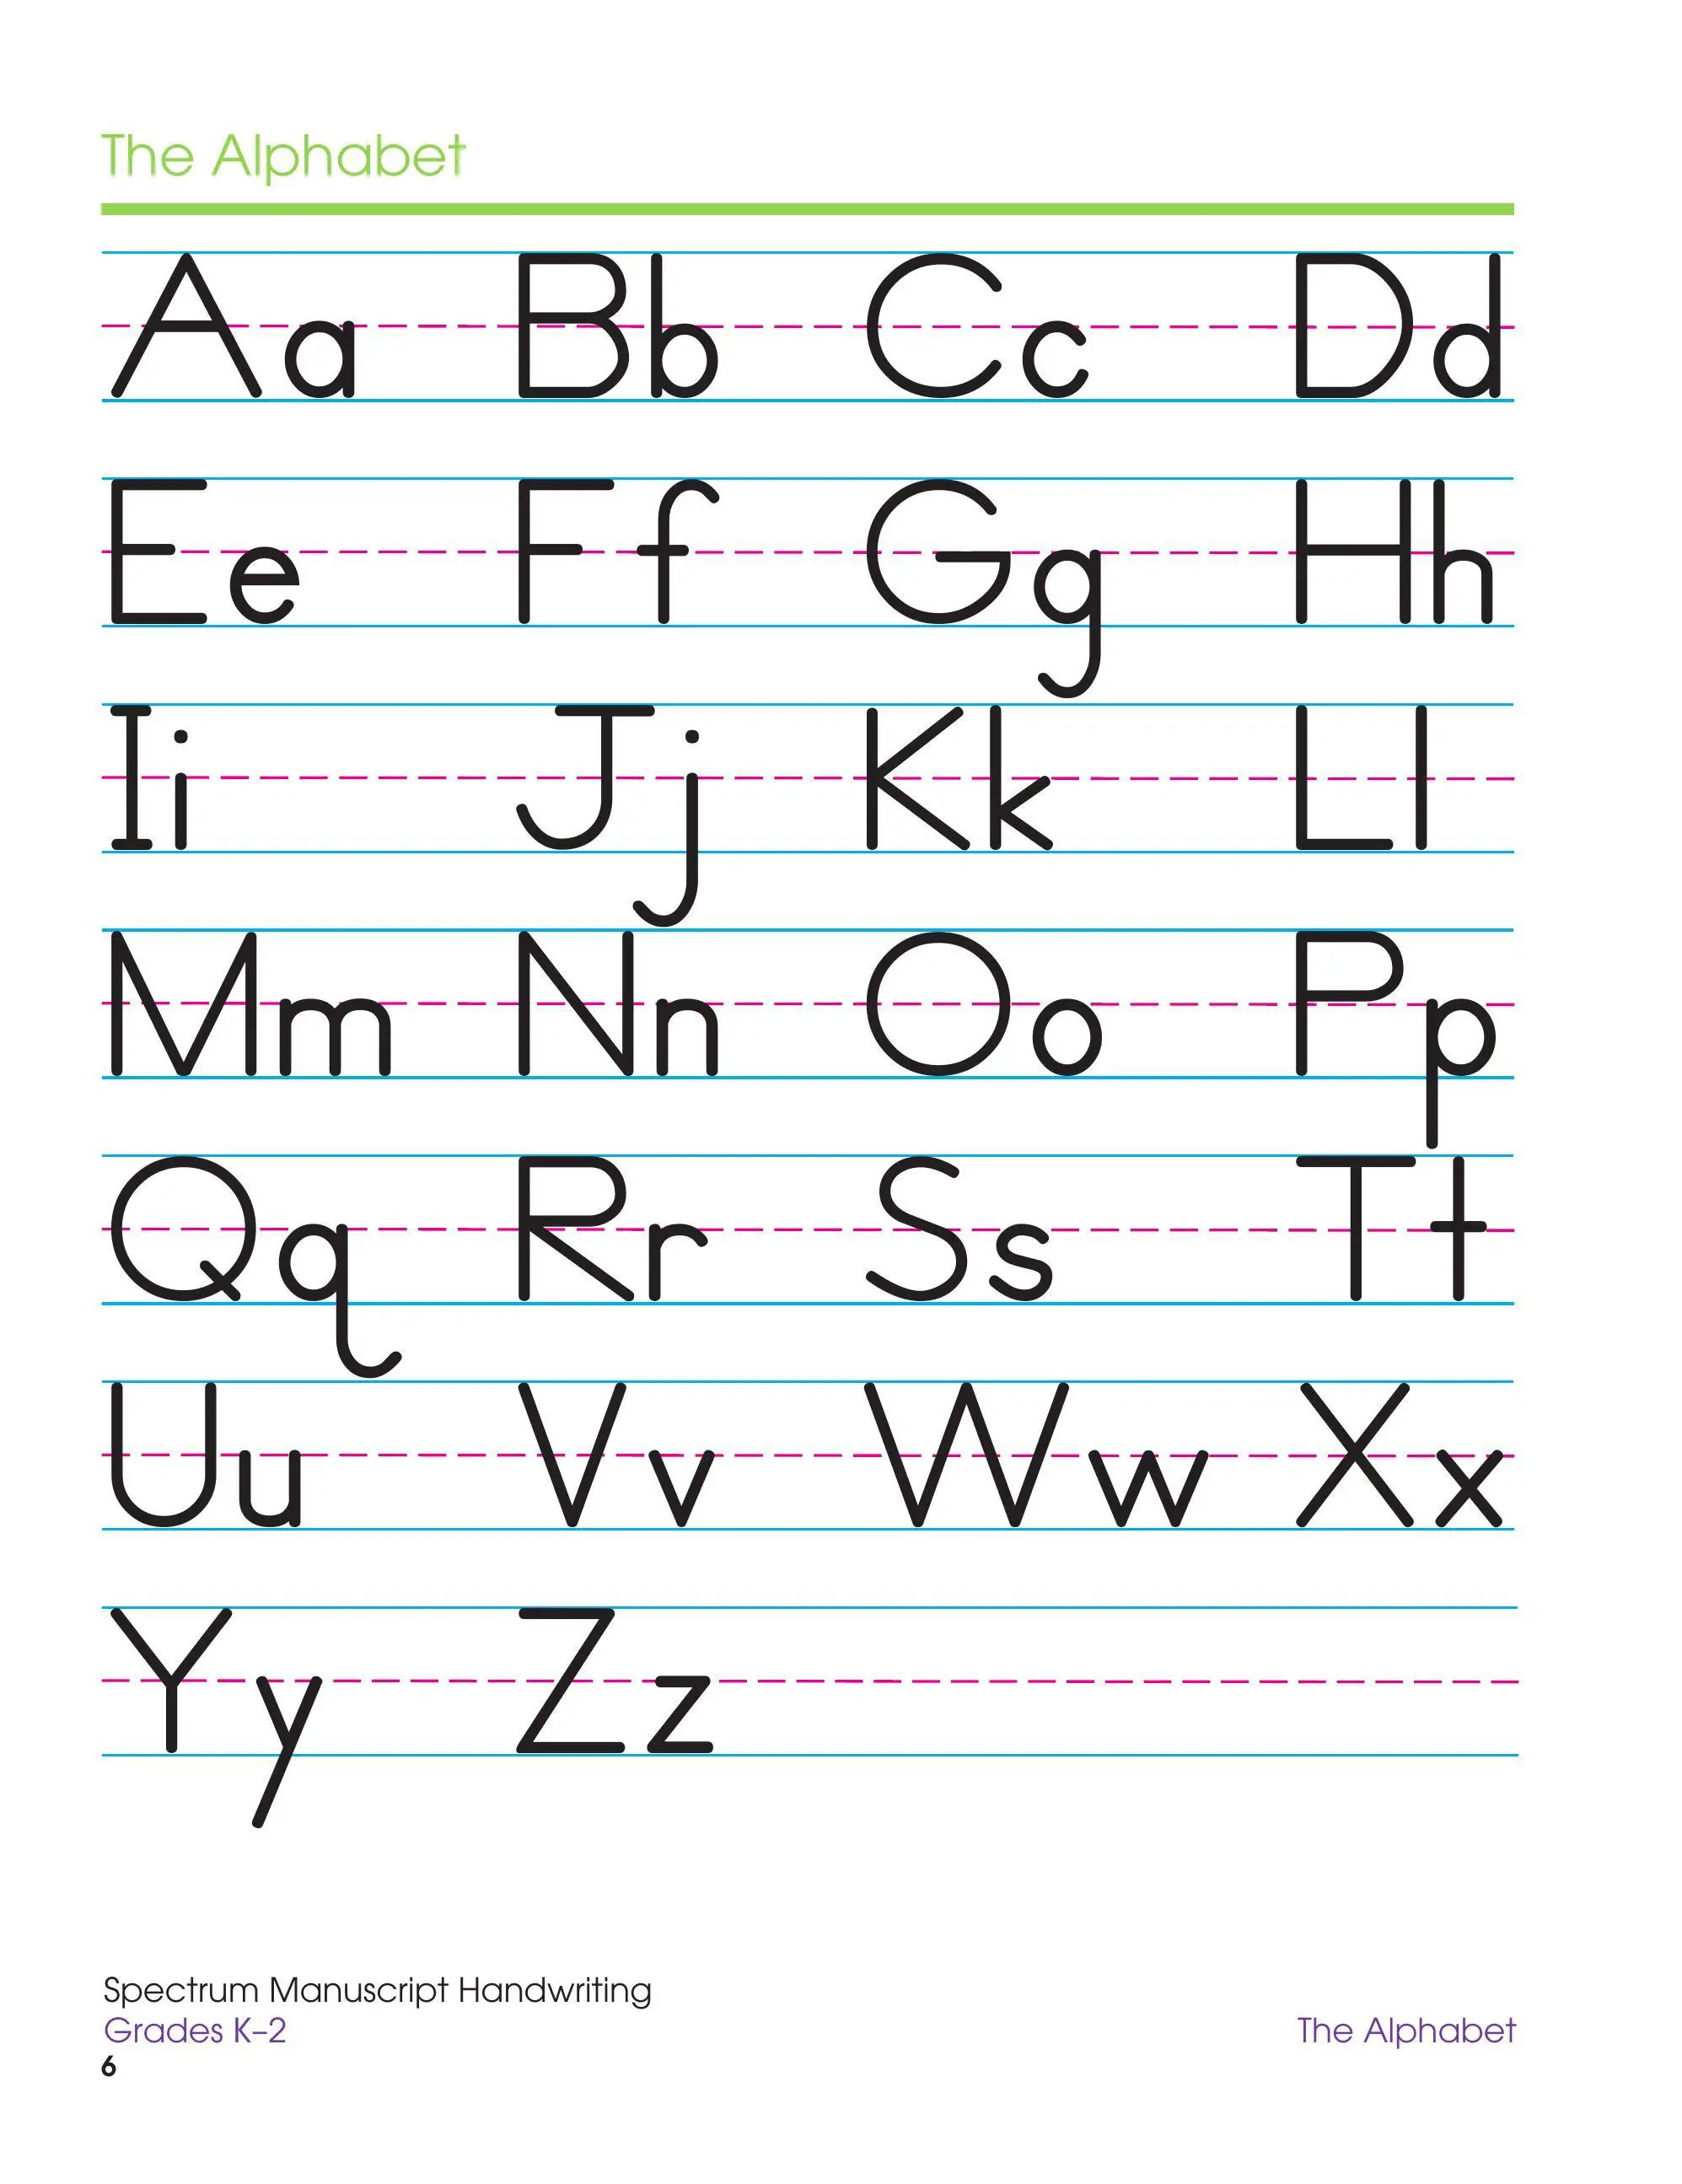 Spectrum Manuscript Handwriting, Grades K   2 (6)